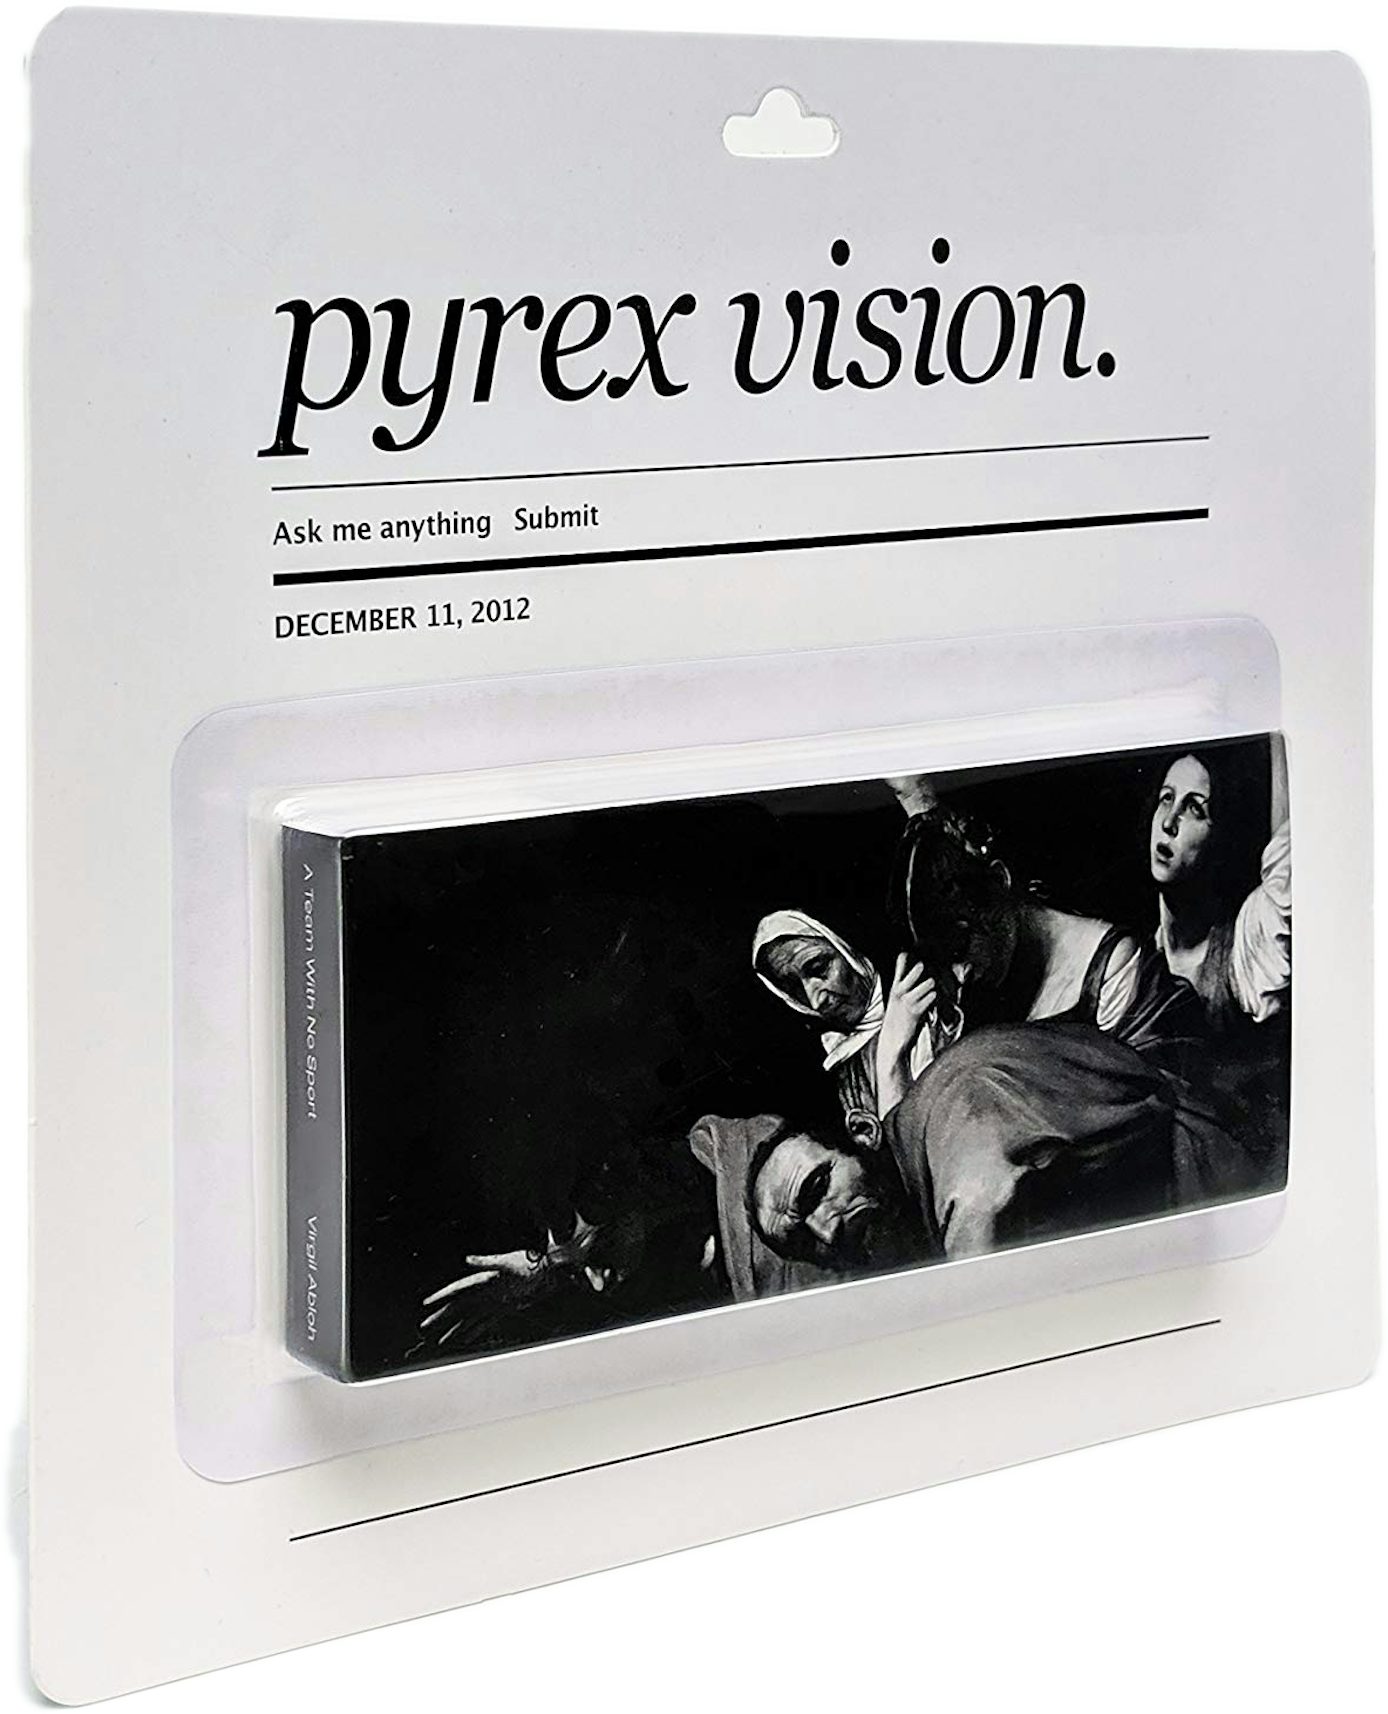 pyrex vision MCA virgilabloh